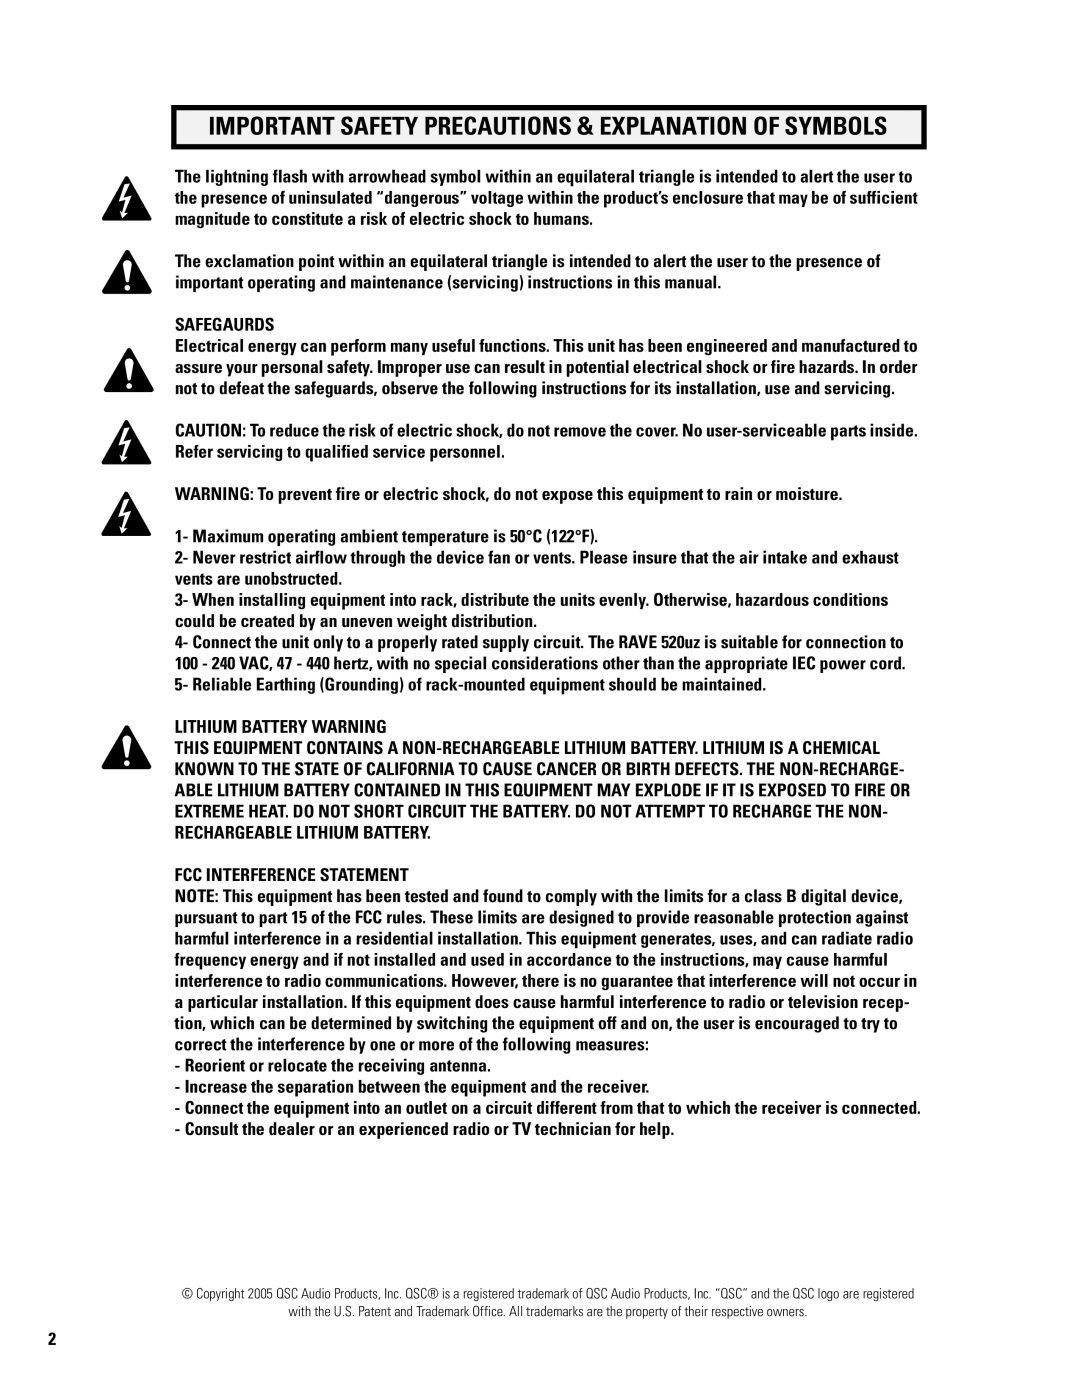 QSC Audio RAVE 520uz manual Safegaurds, Lithium Battery Warning, Fcc Interference Statement 